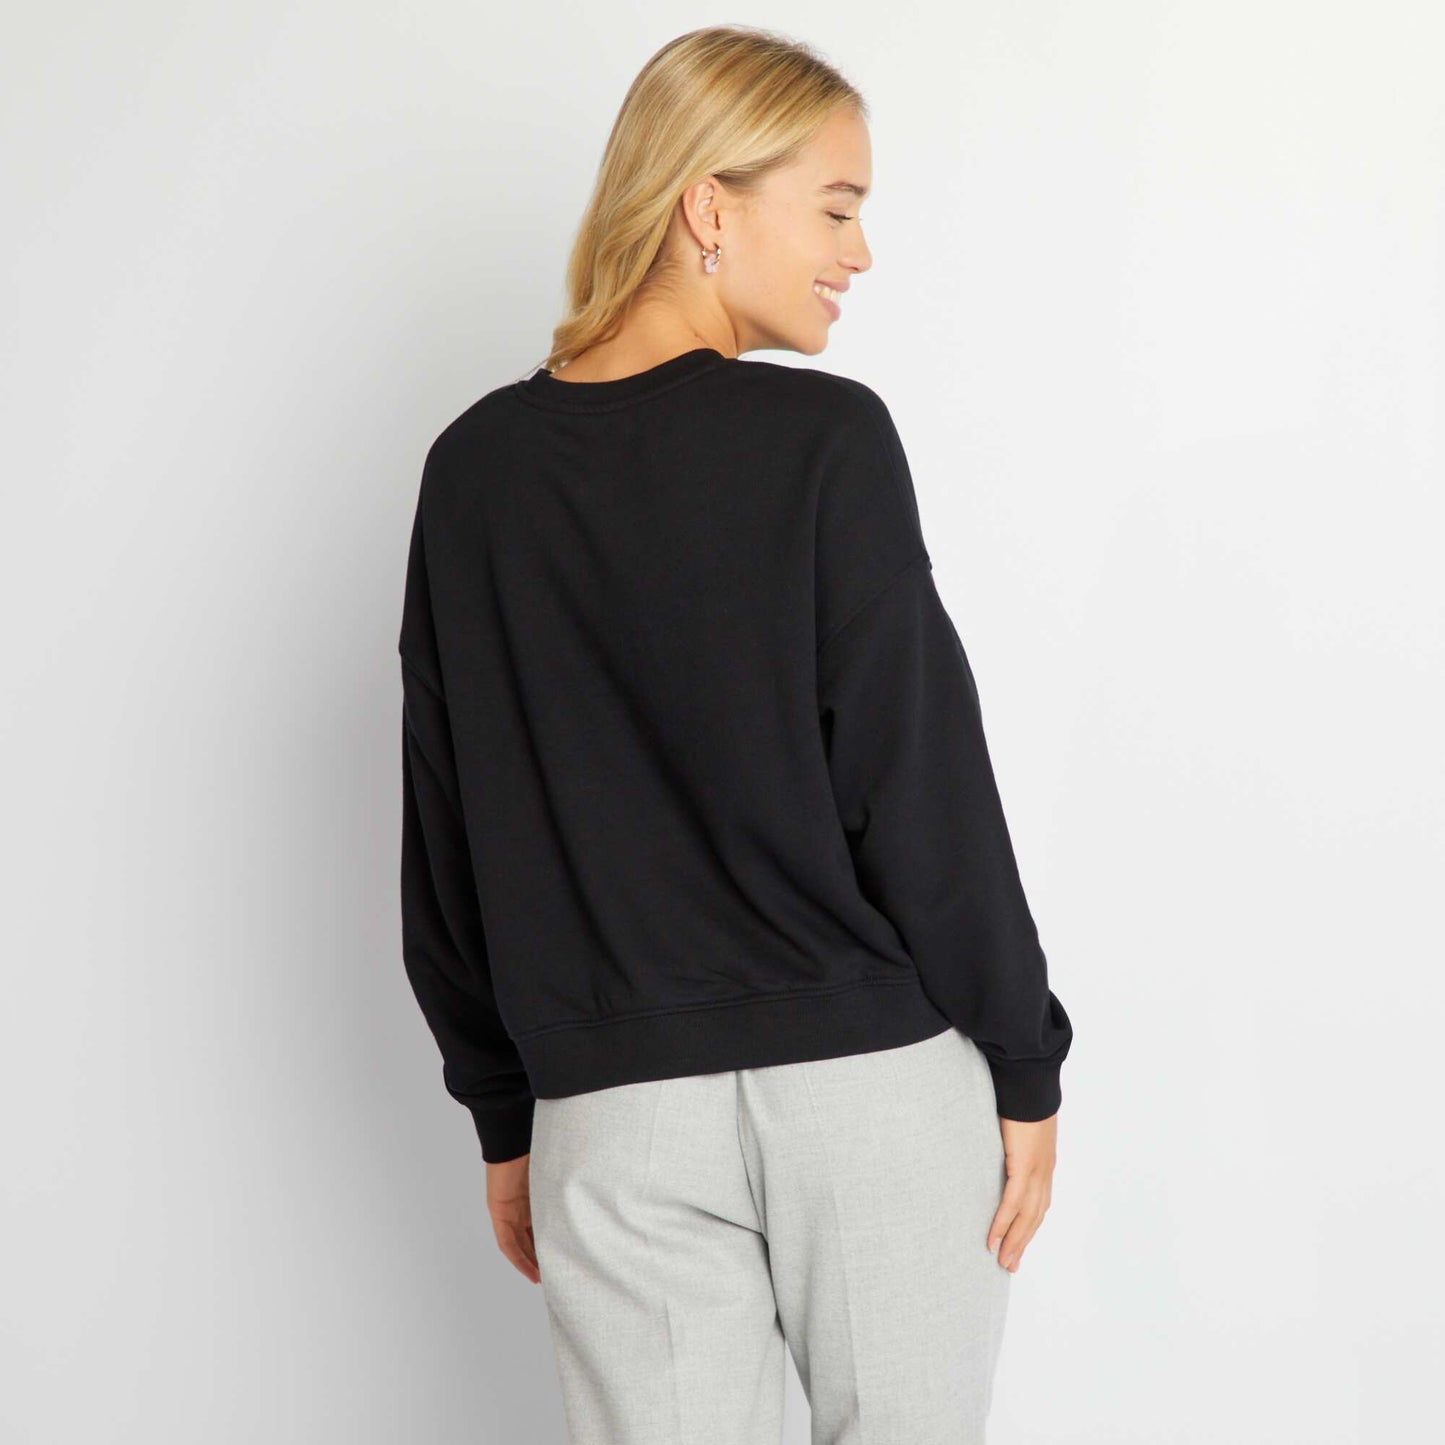 Plain sweatshirt fabric sweater black